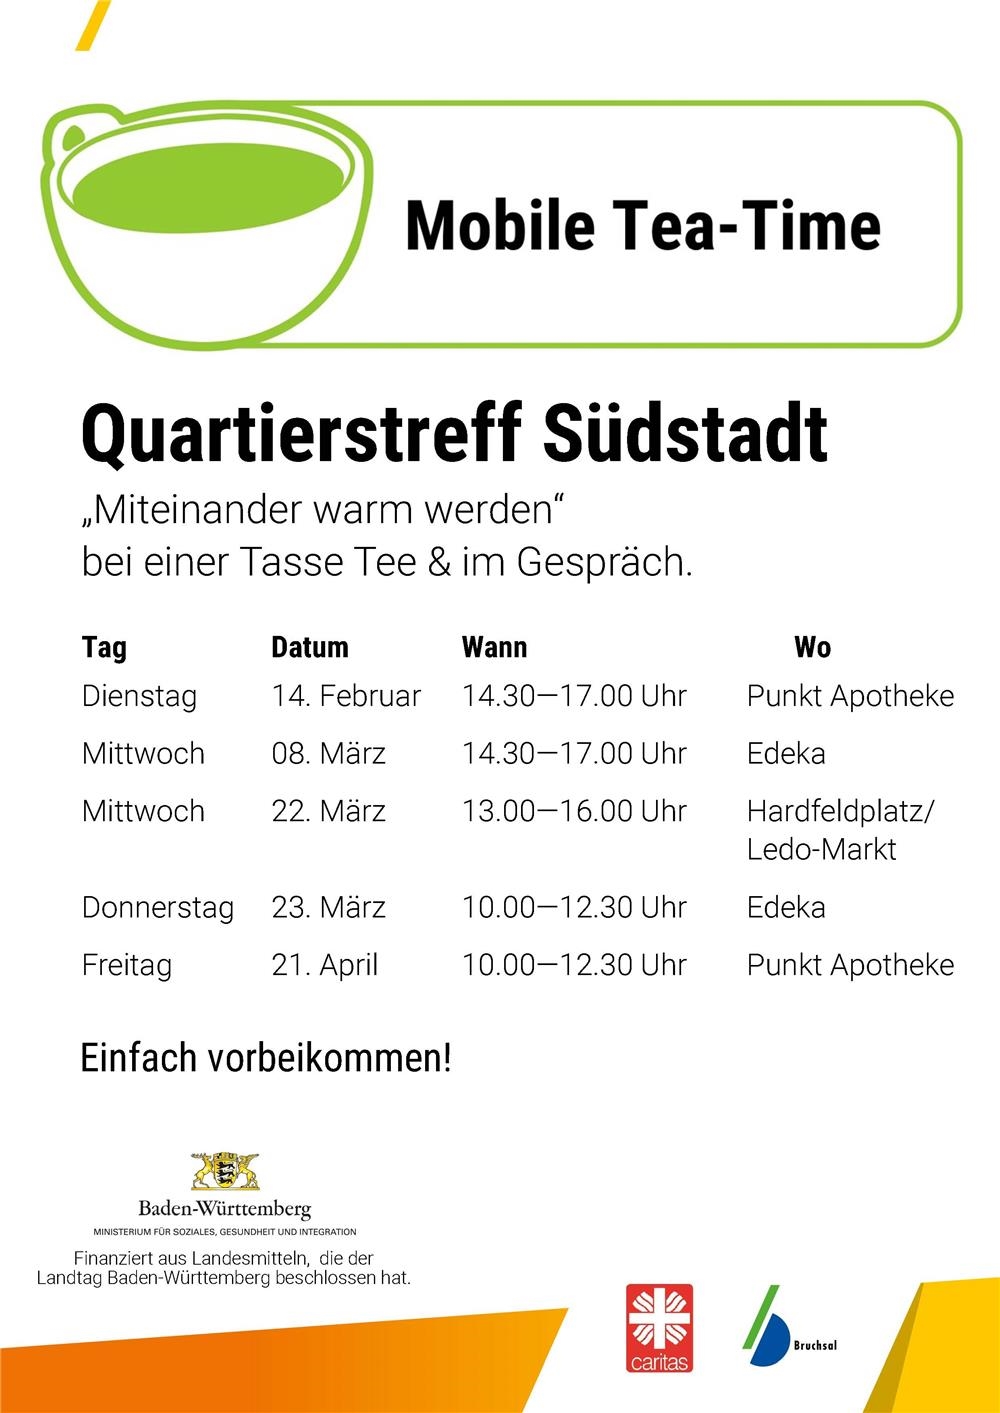 Quartierstreff Bruchsal - Termine Mobile Tea-Time